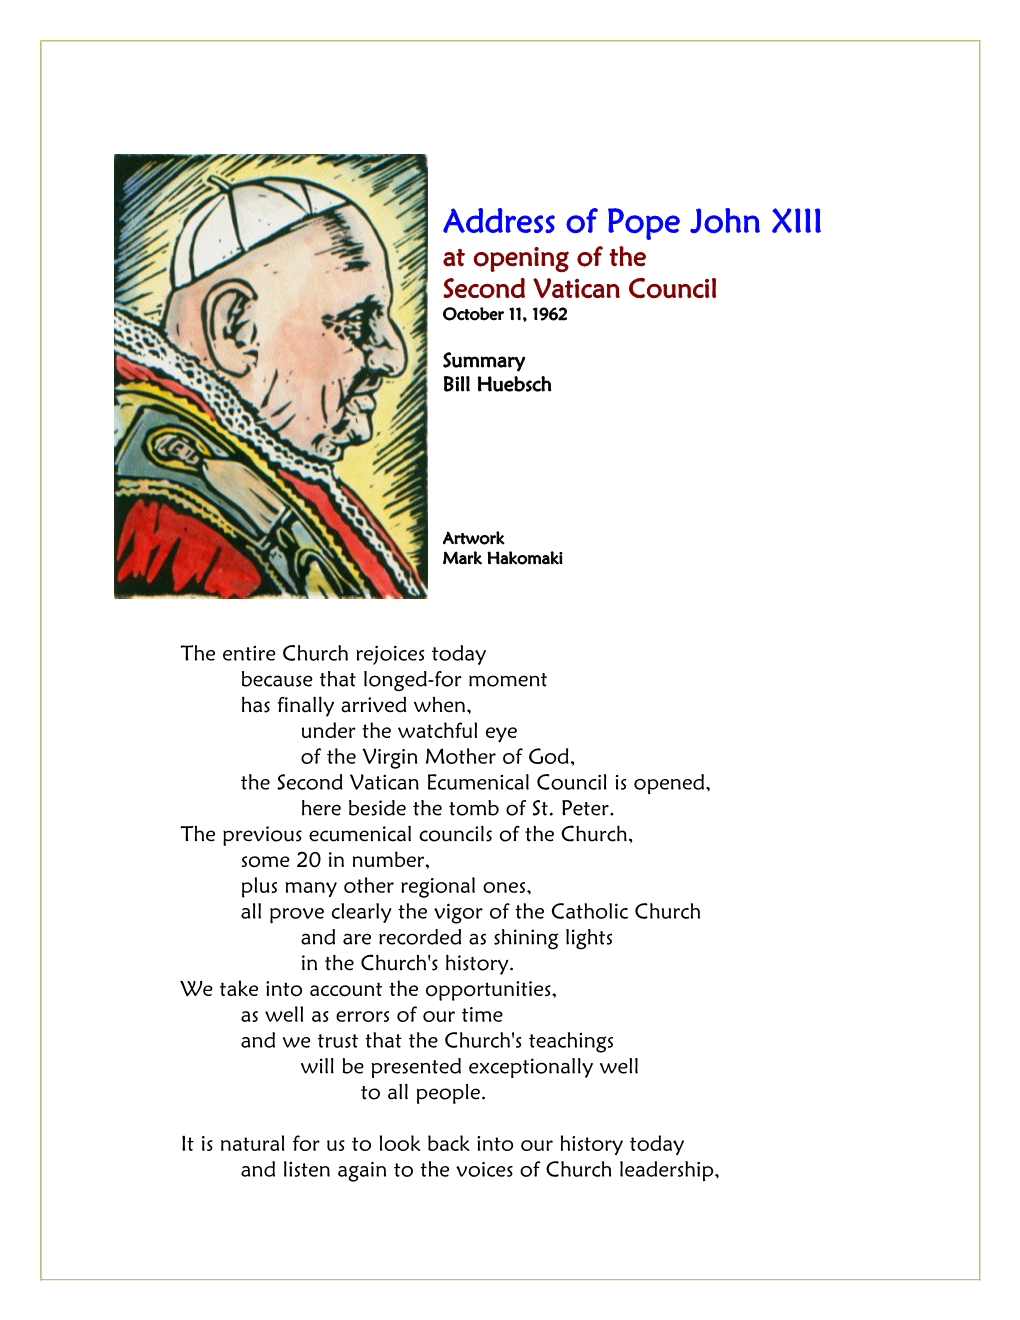 Address of Pope John XXIII